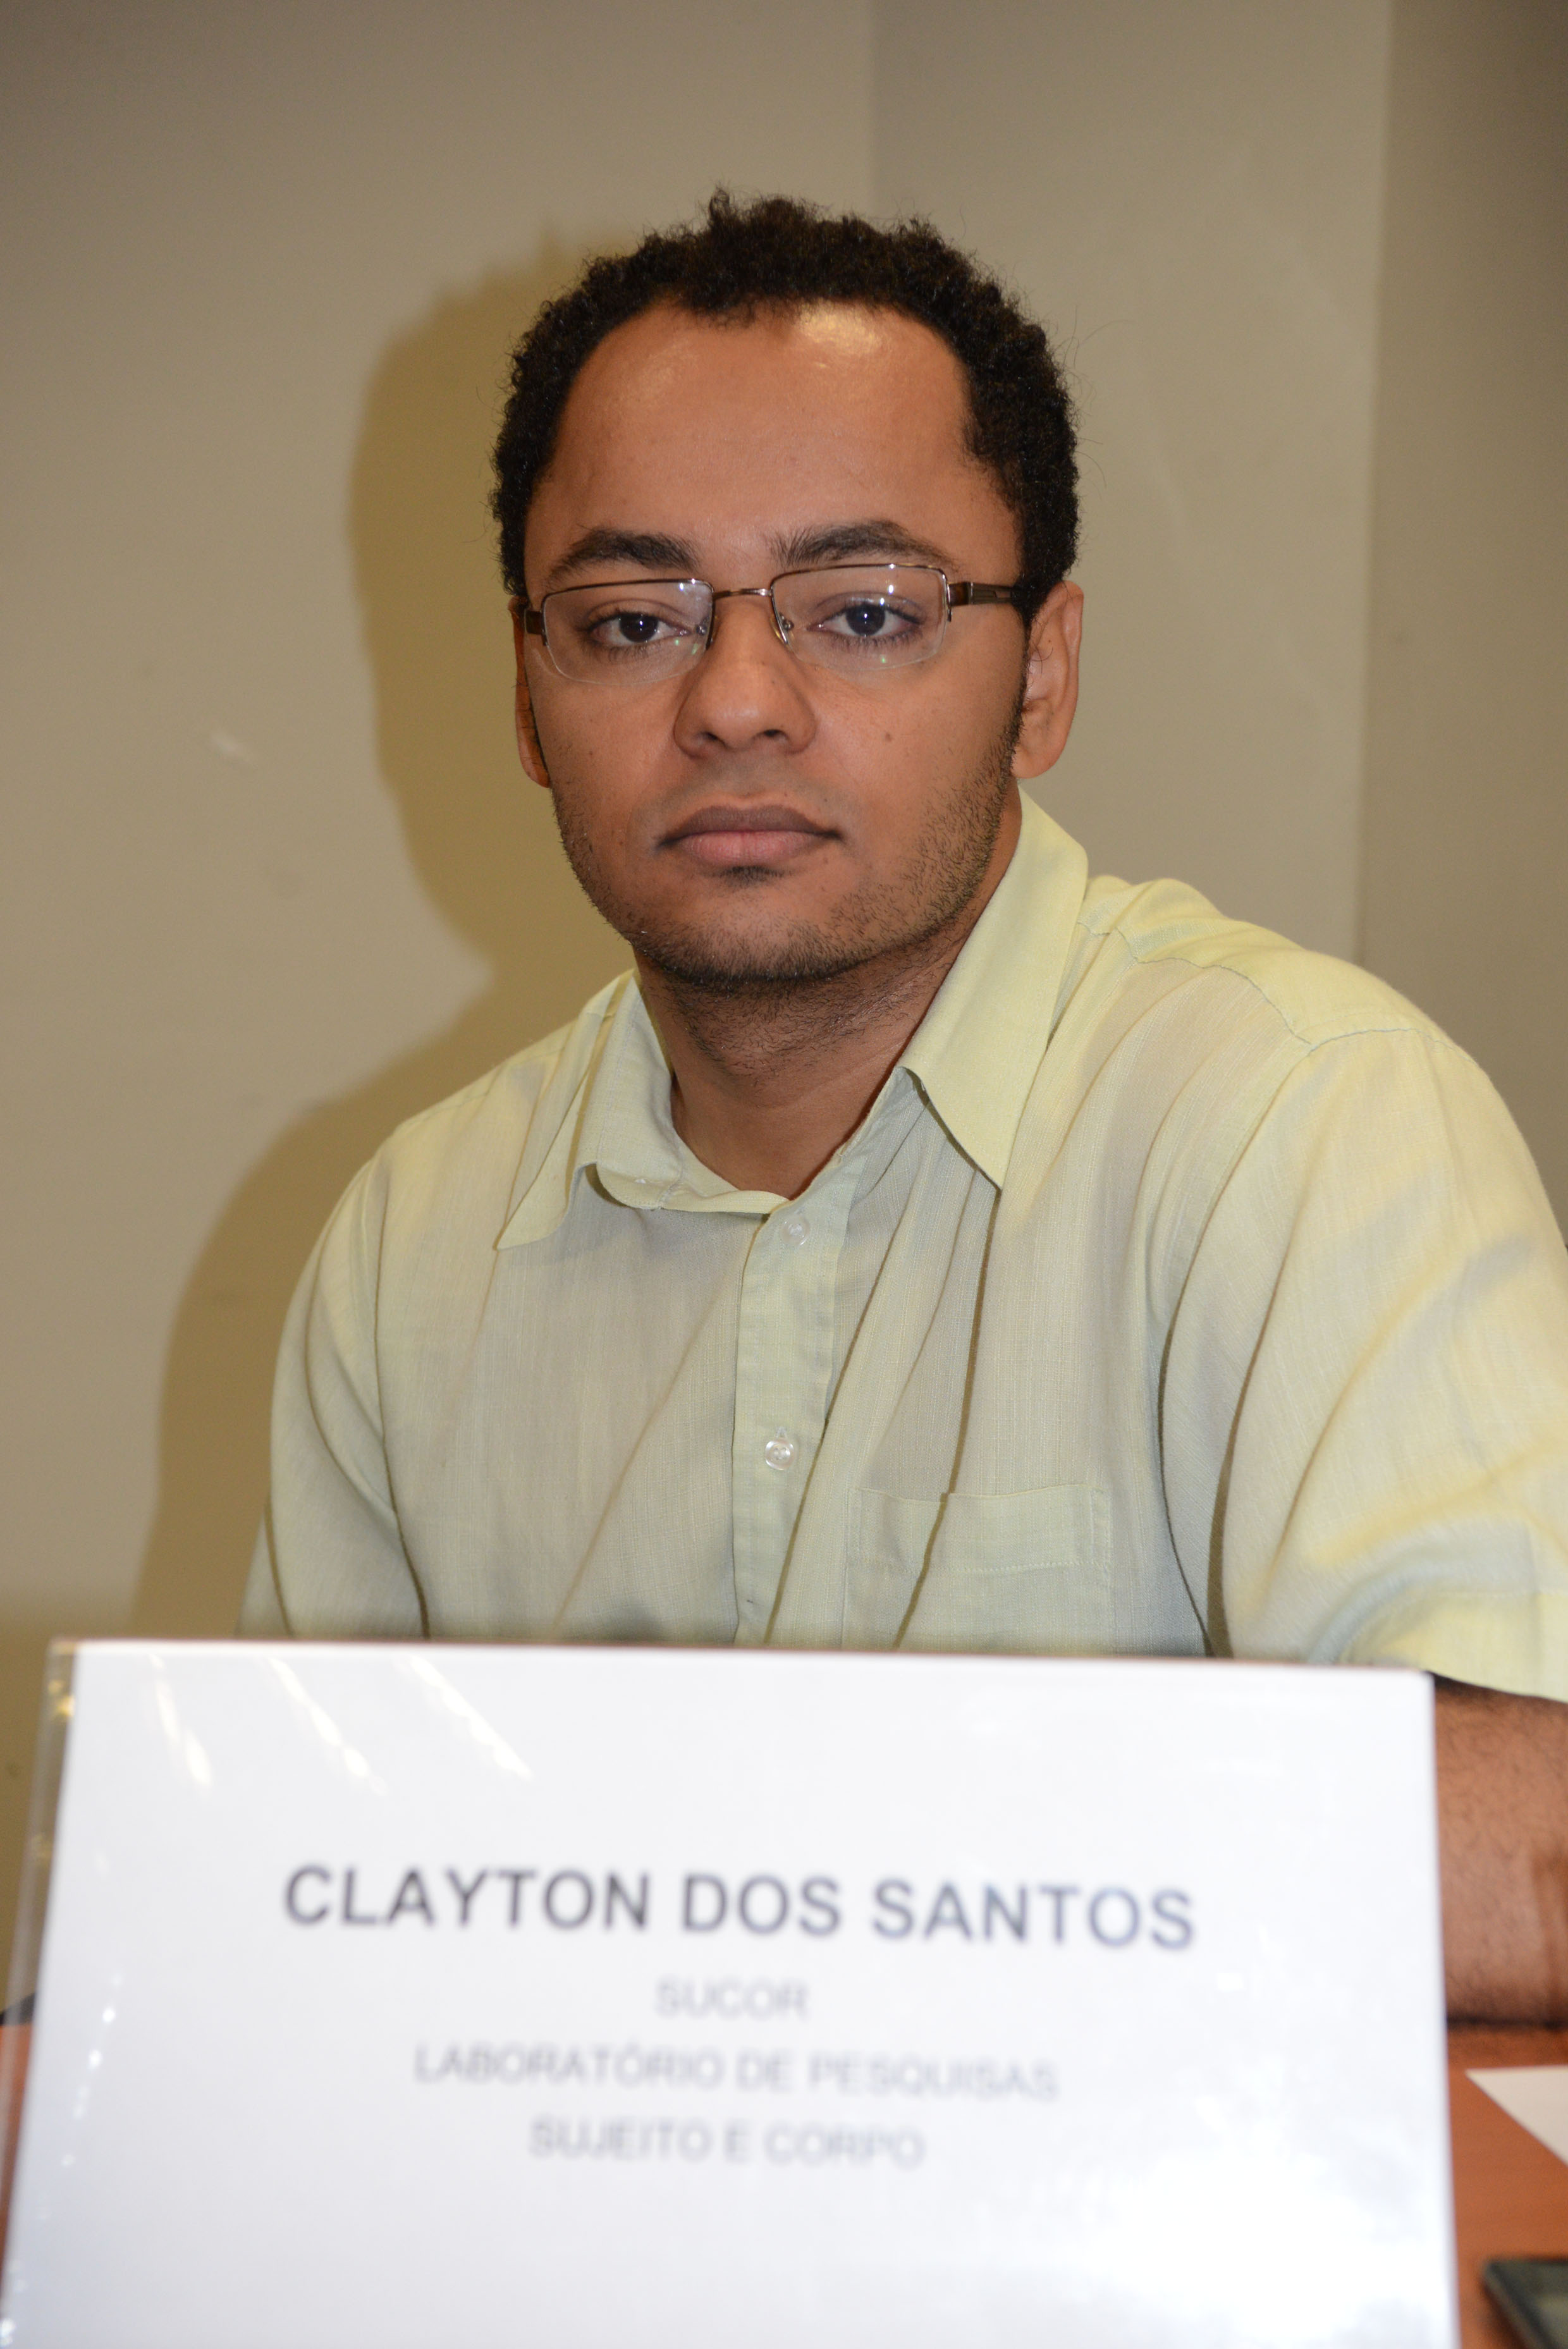 Clayton dos Santos <a style='float:right;color:#ccc' href='https://www3.al.sp.gov.br/repositorio/noticia/N-12-2013/fg156992.jpg' target=_blank><i class='bi bi-zoom-in'></i> Clique para ver a imagem </a>